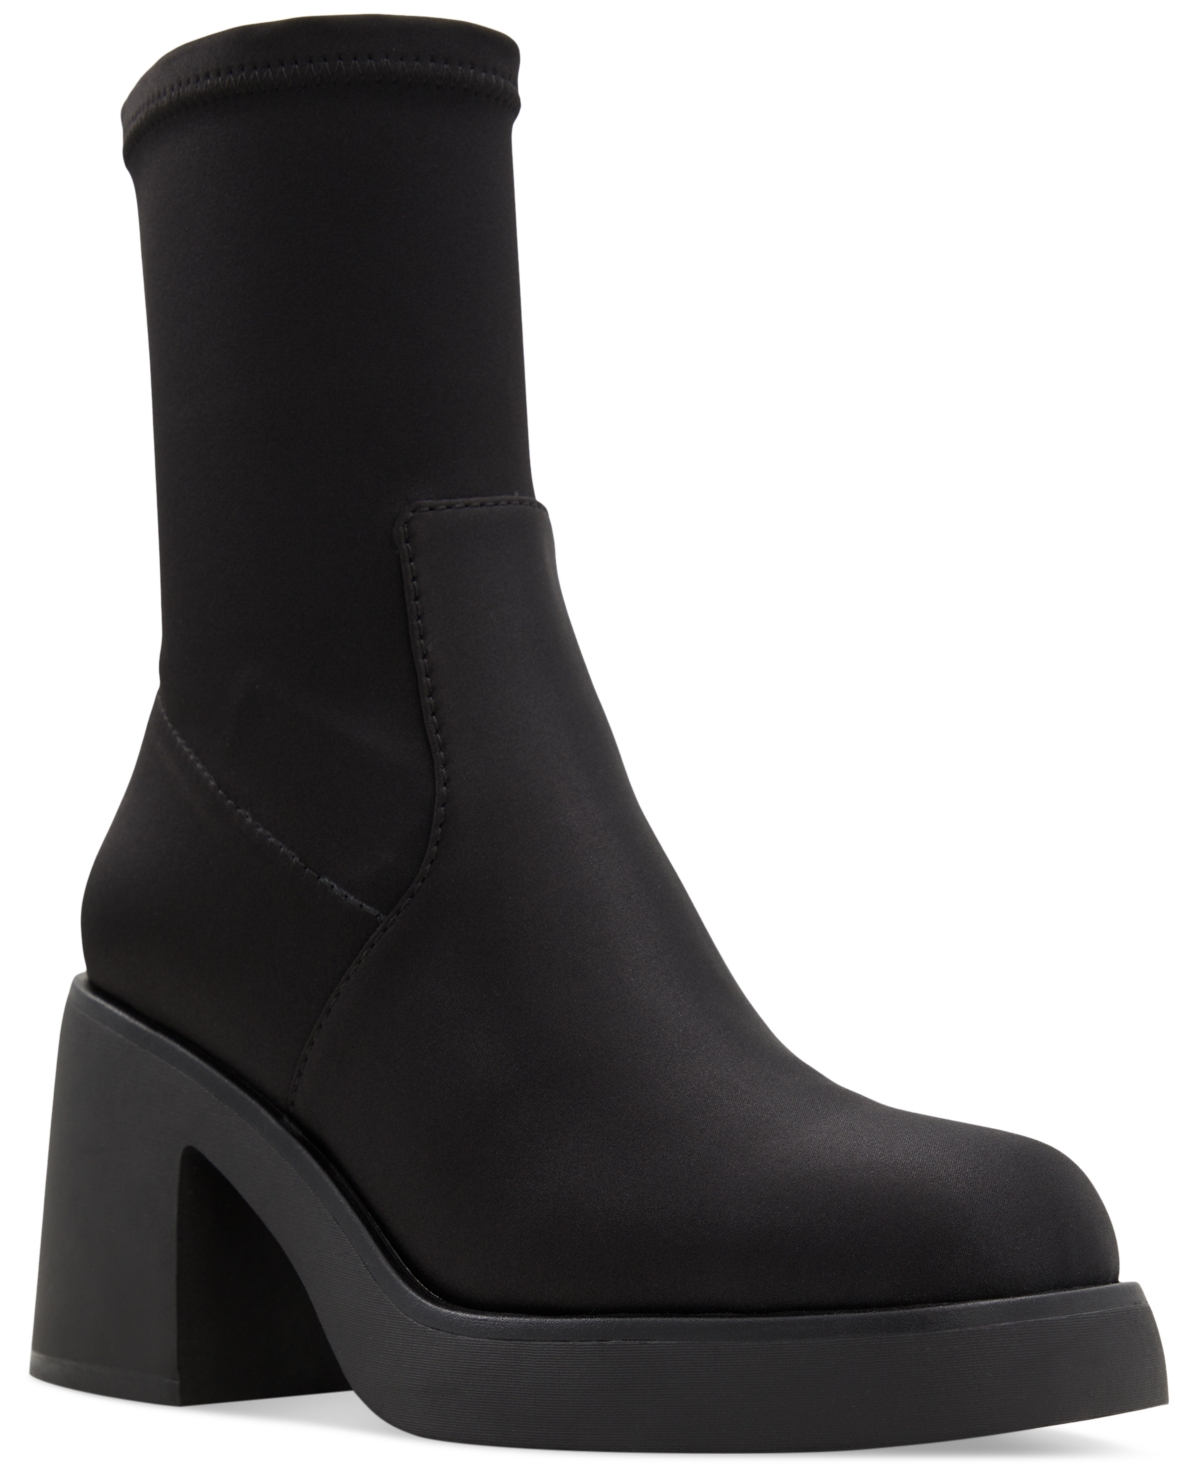 Women's Persona Pull-On Block-Heel Boots - Black/Black